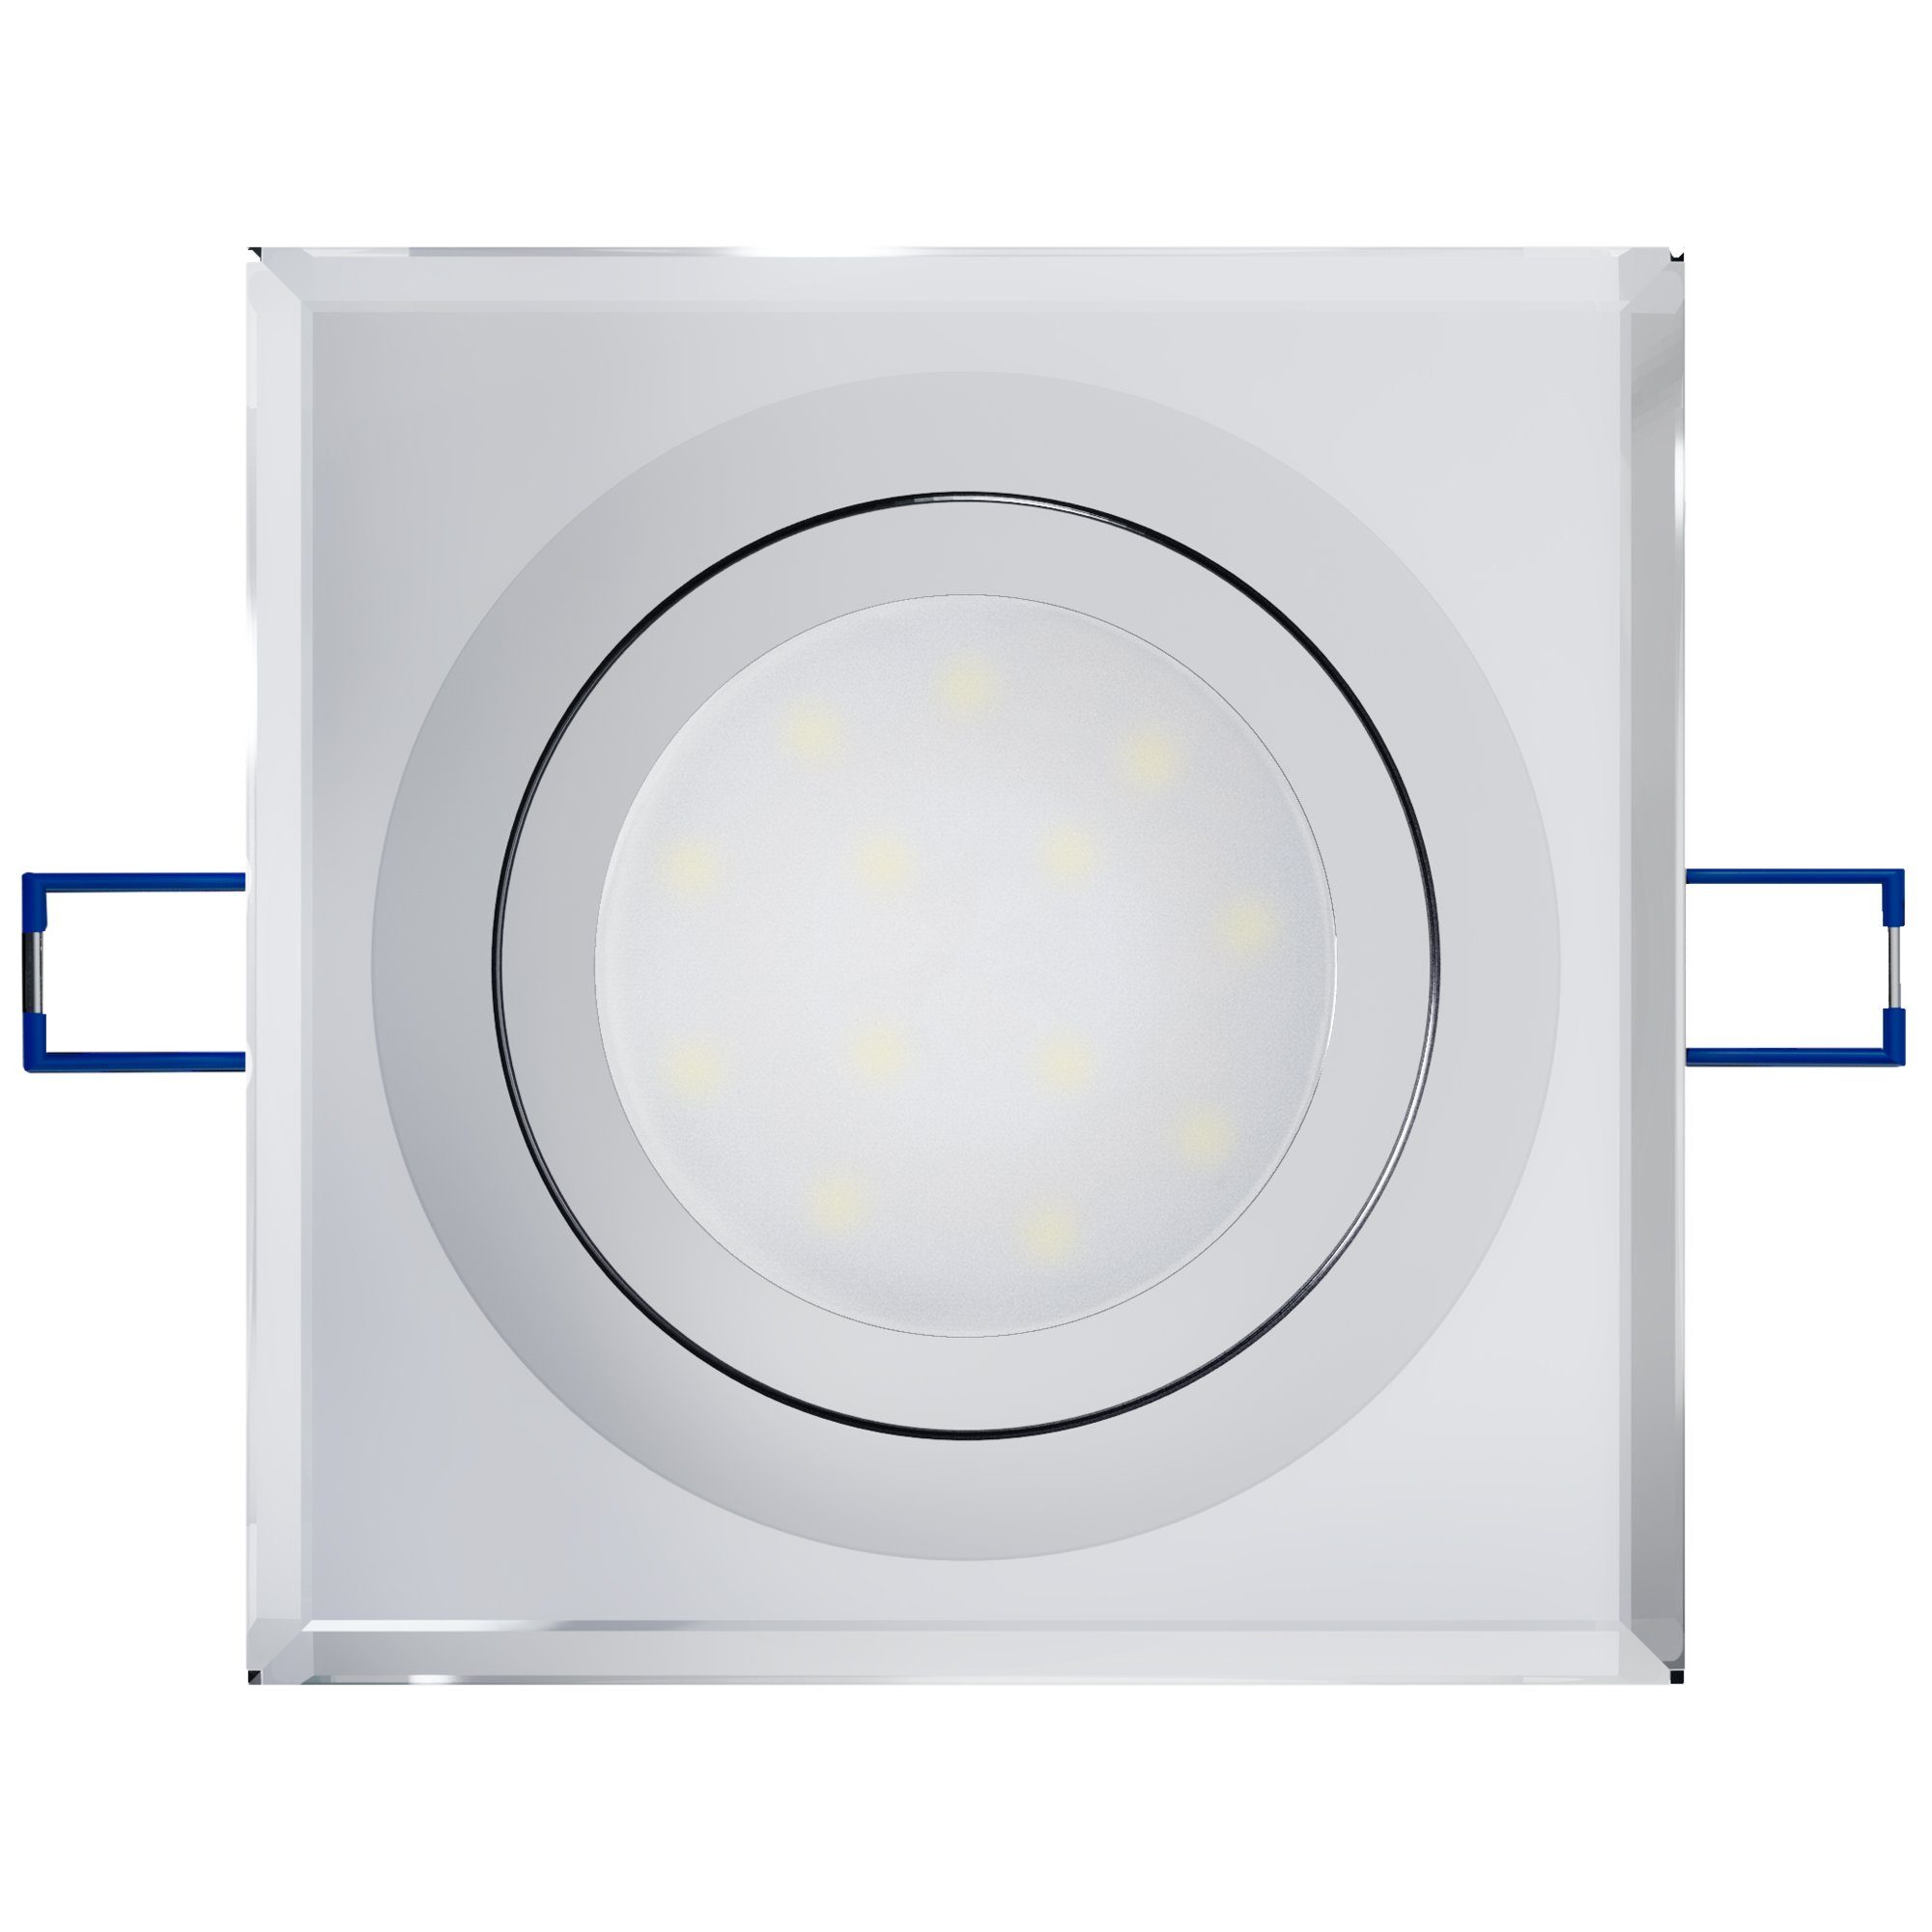 SSC-LUXon LED LED Schwenkbarer Glas Einbauspot eckig klar Einbaustrahler flach Modul LED Neutralweiß dimmbar